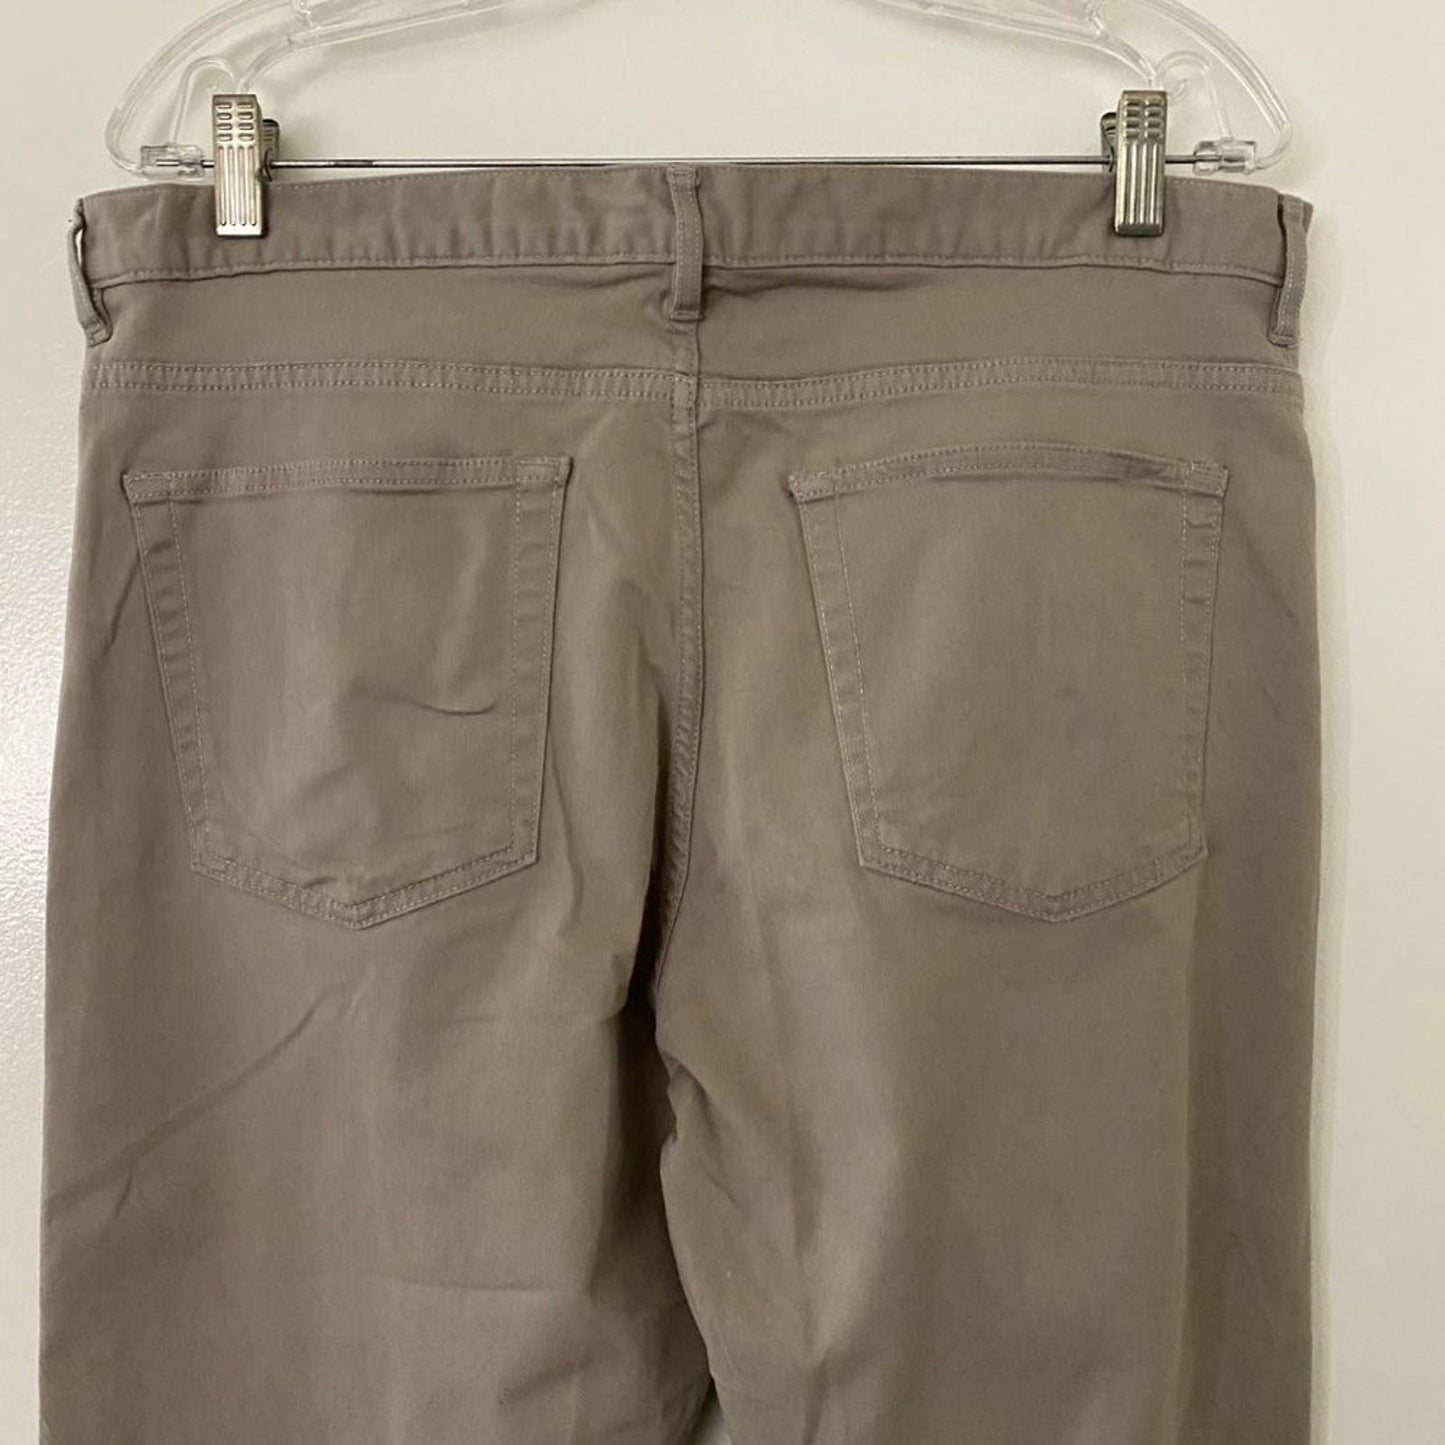 H&M sz 34 Slim fit men's khaki pants